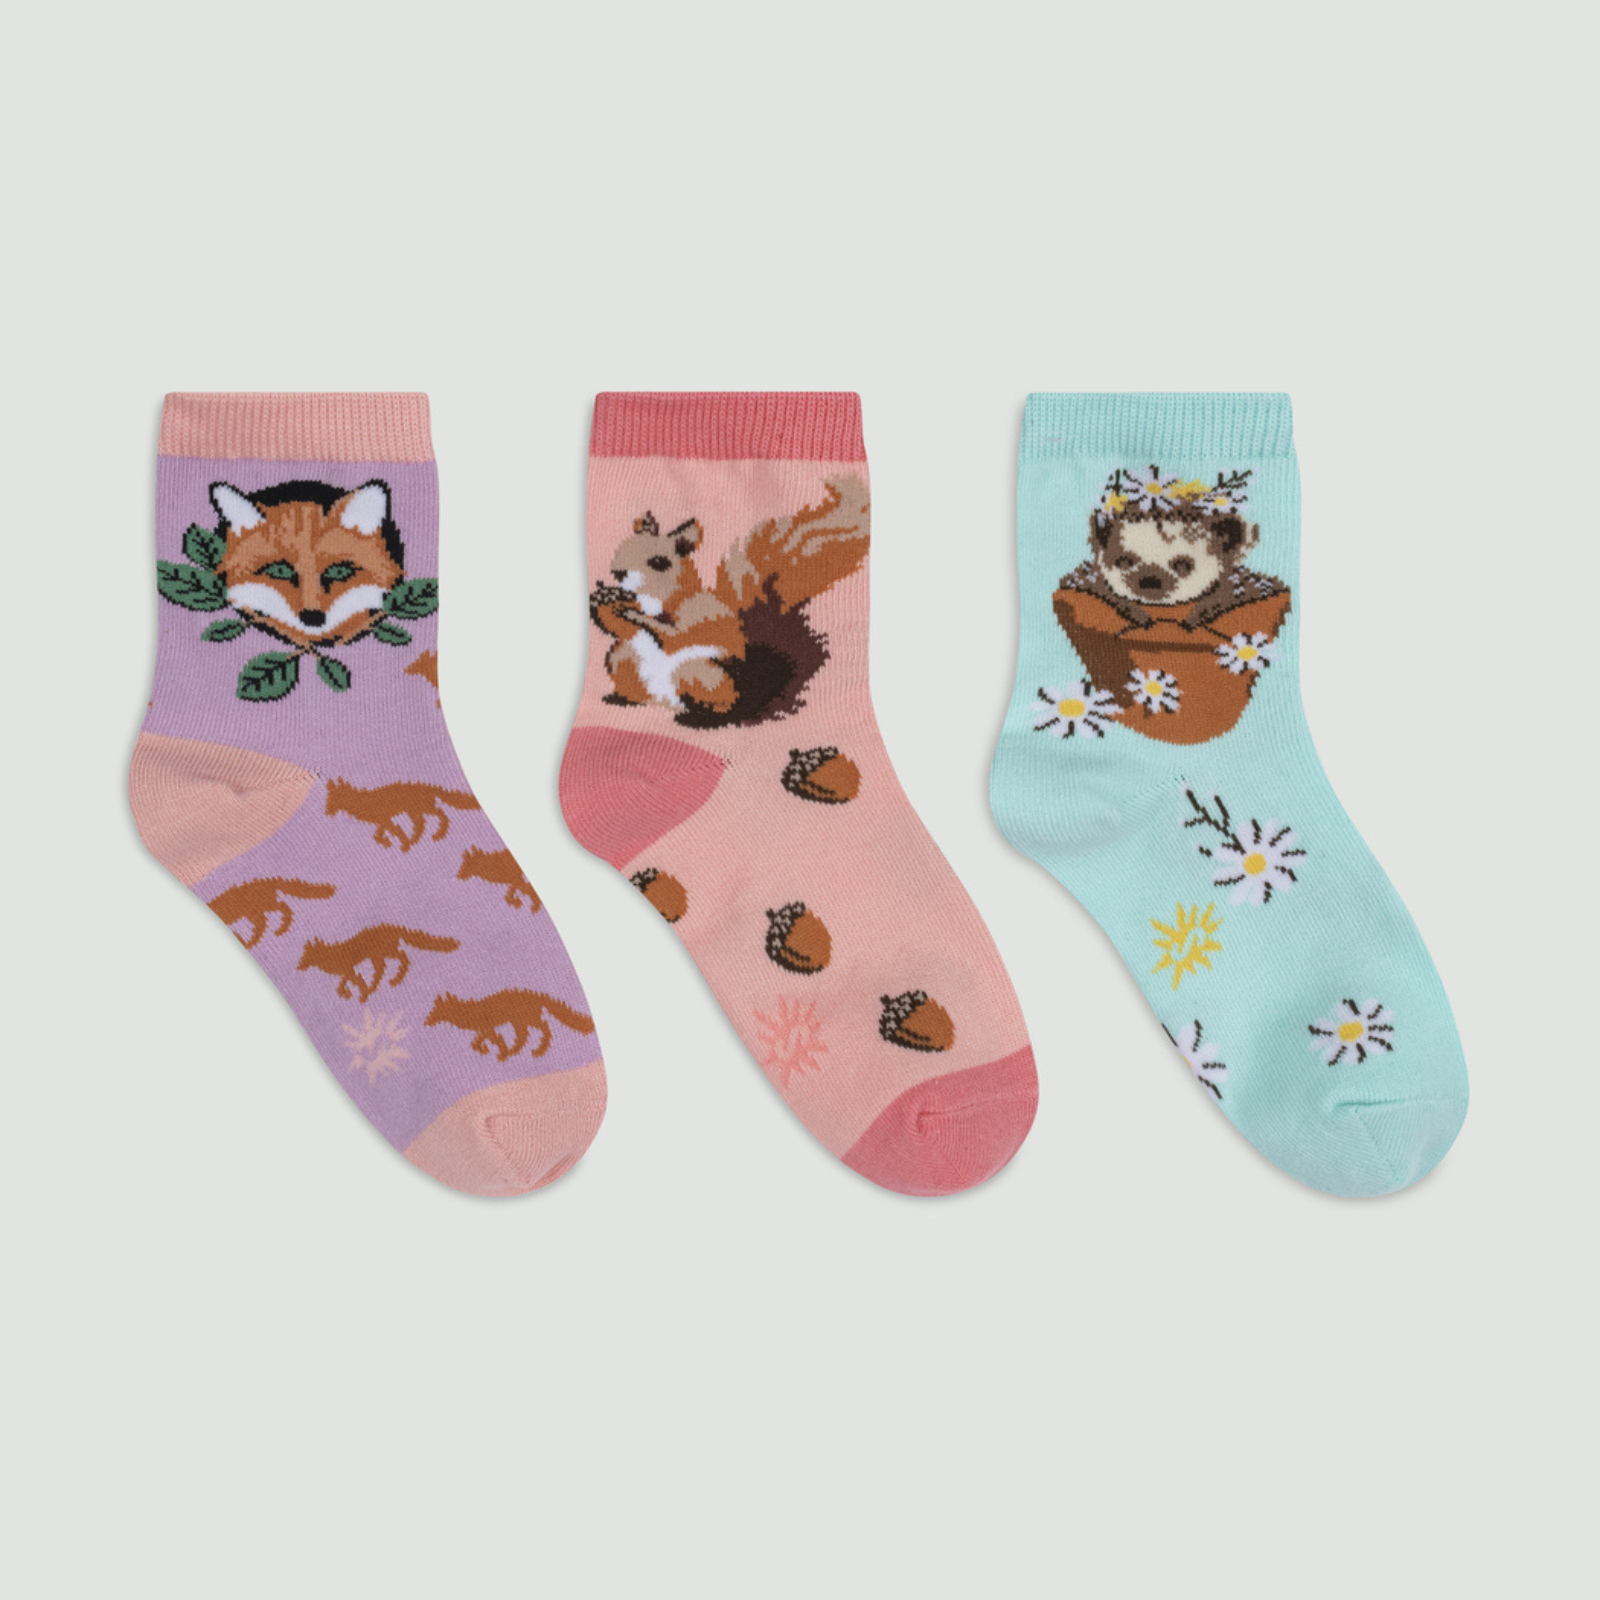 Sock It To Me My Dear Hedgehog 3-pack kids' socks featuring fox, squirrel, and hedgehog socks